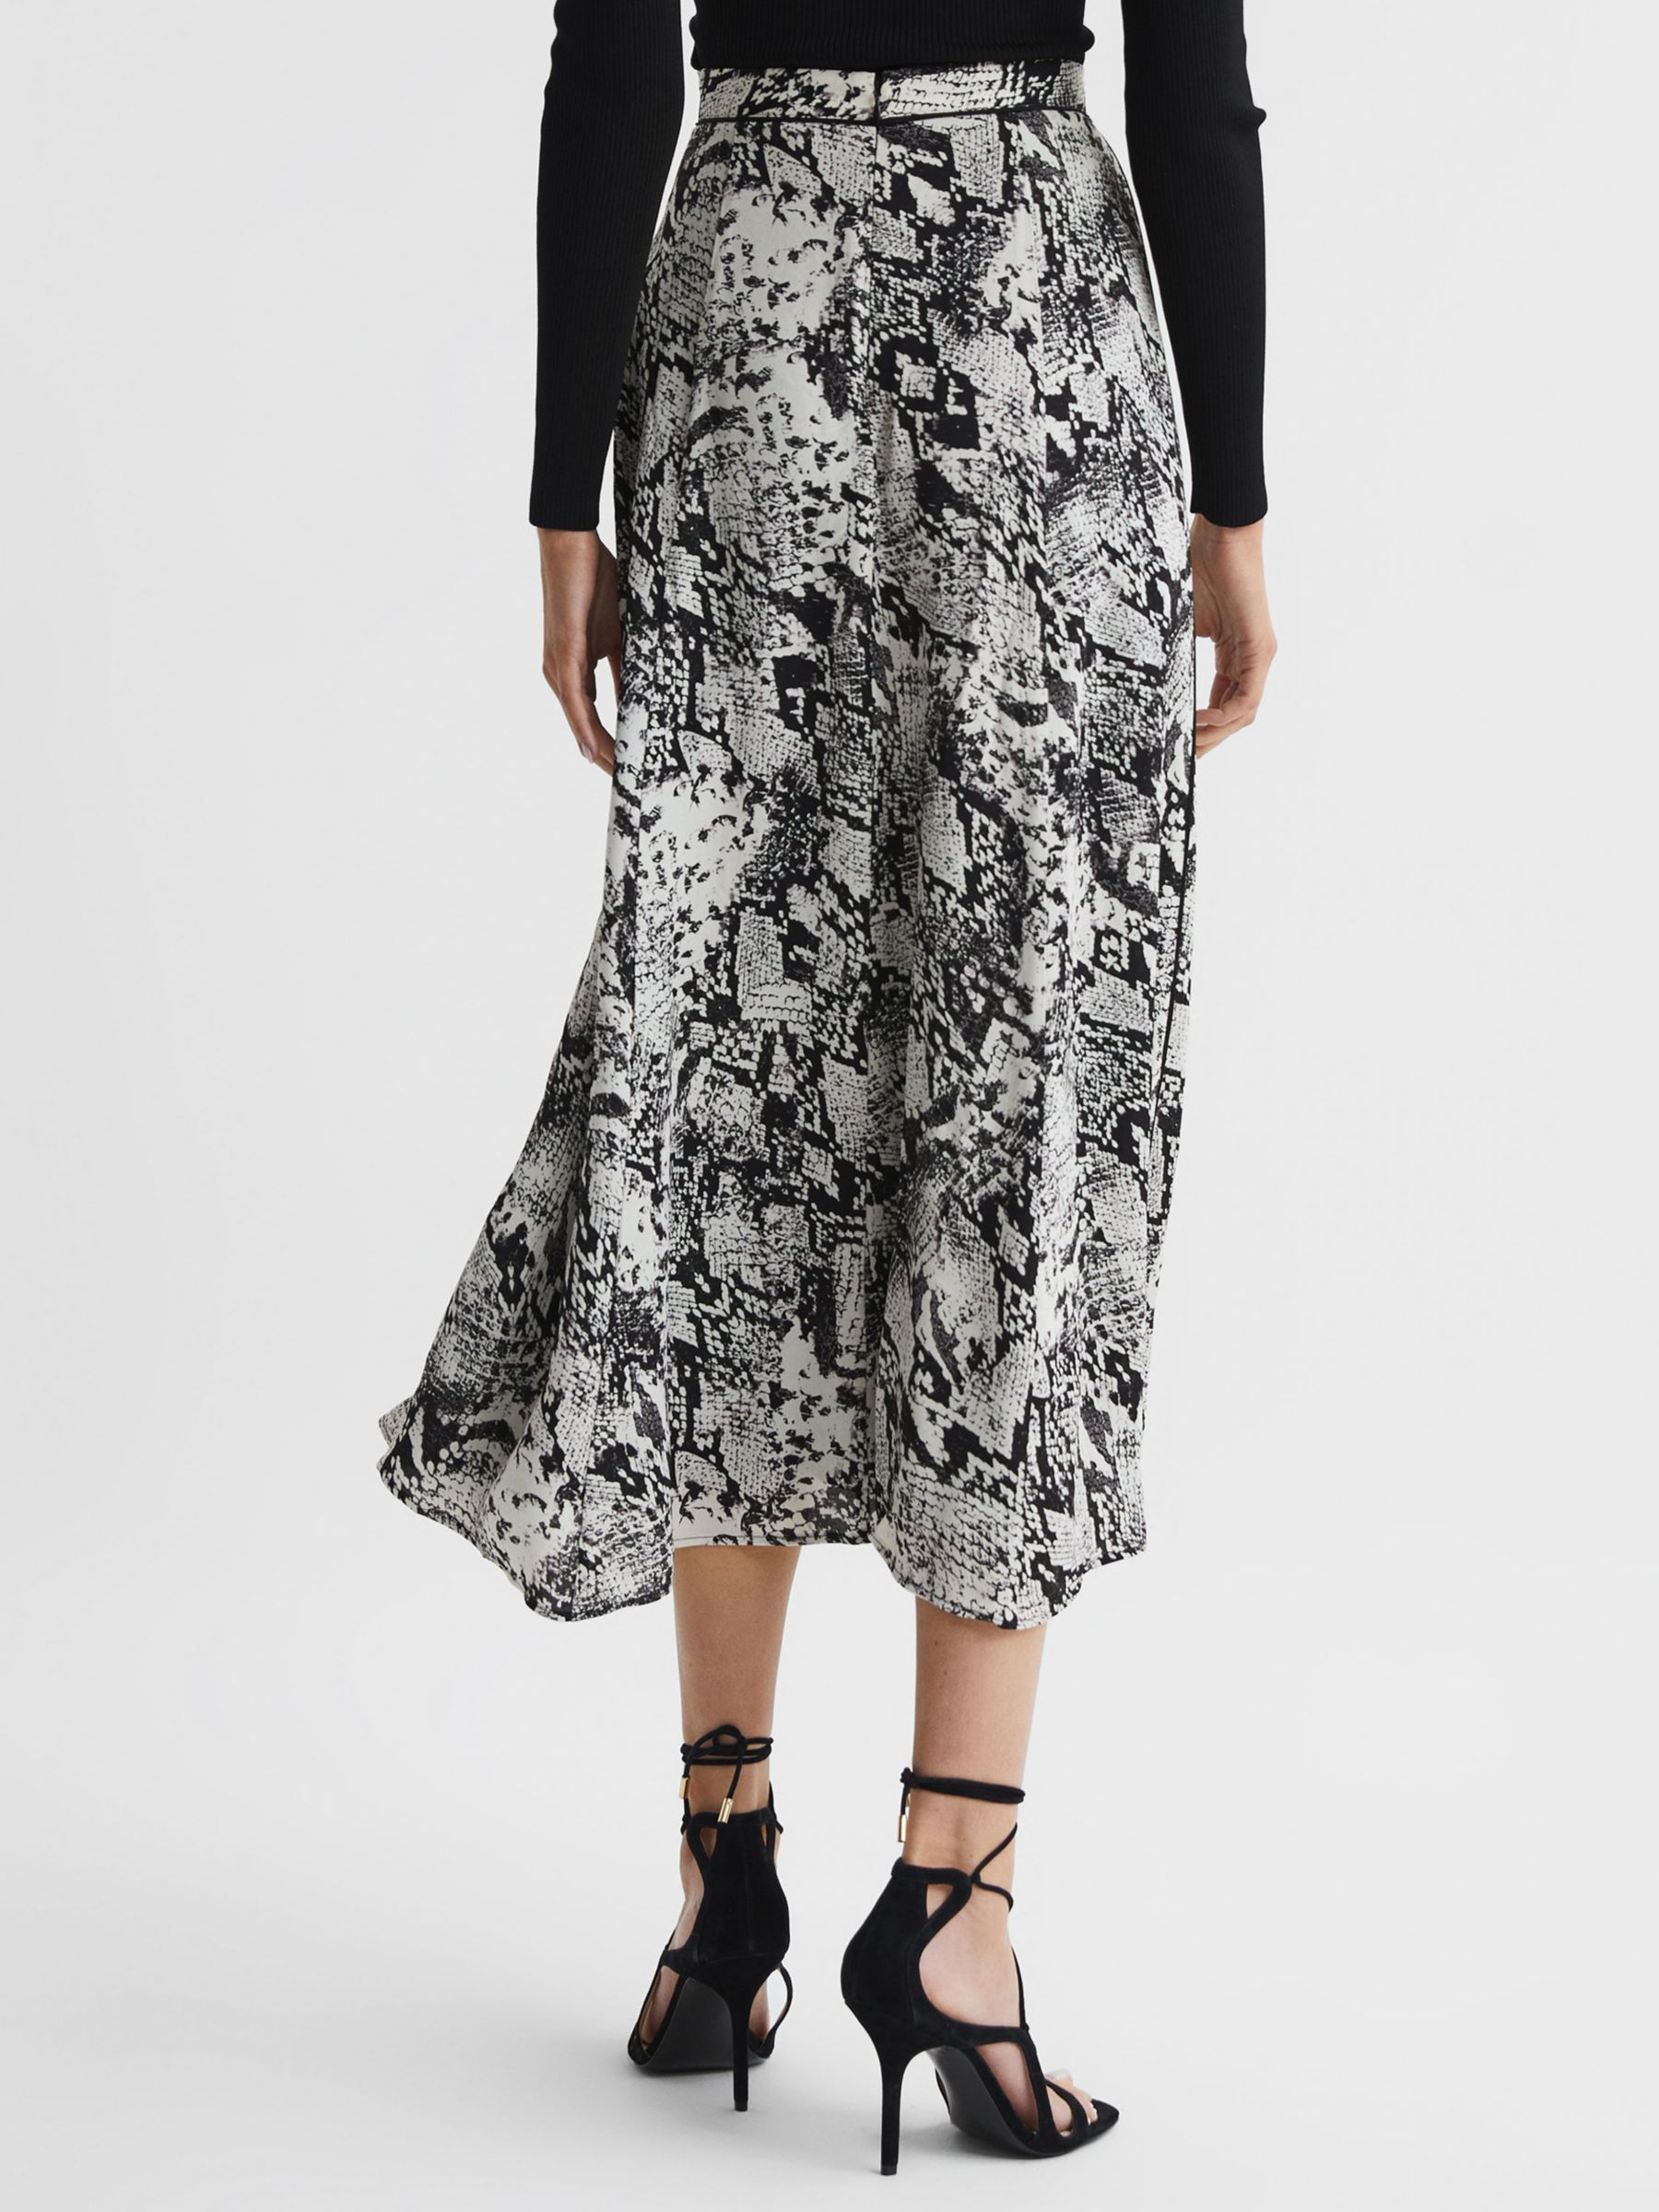 Reiss Katia Snake Print Midi Skirt, Black/White at John Lewis & Partners